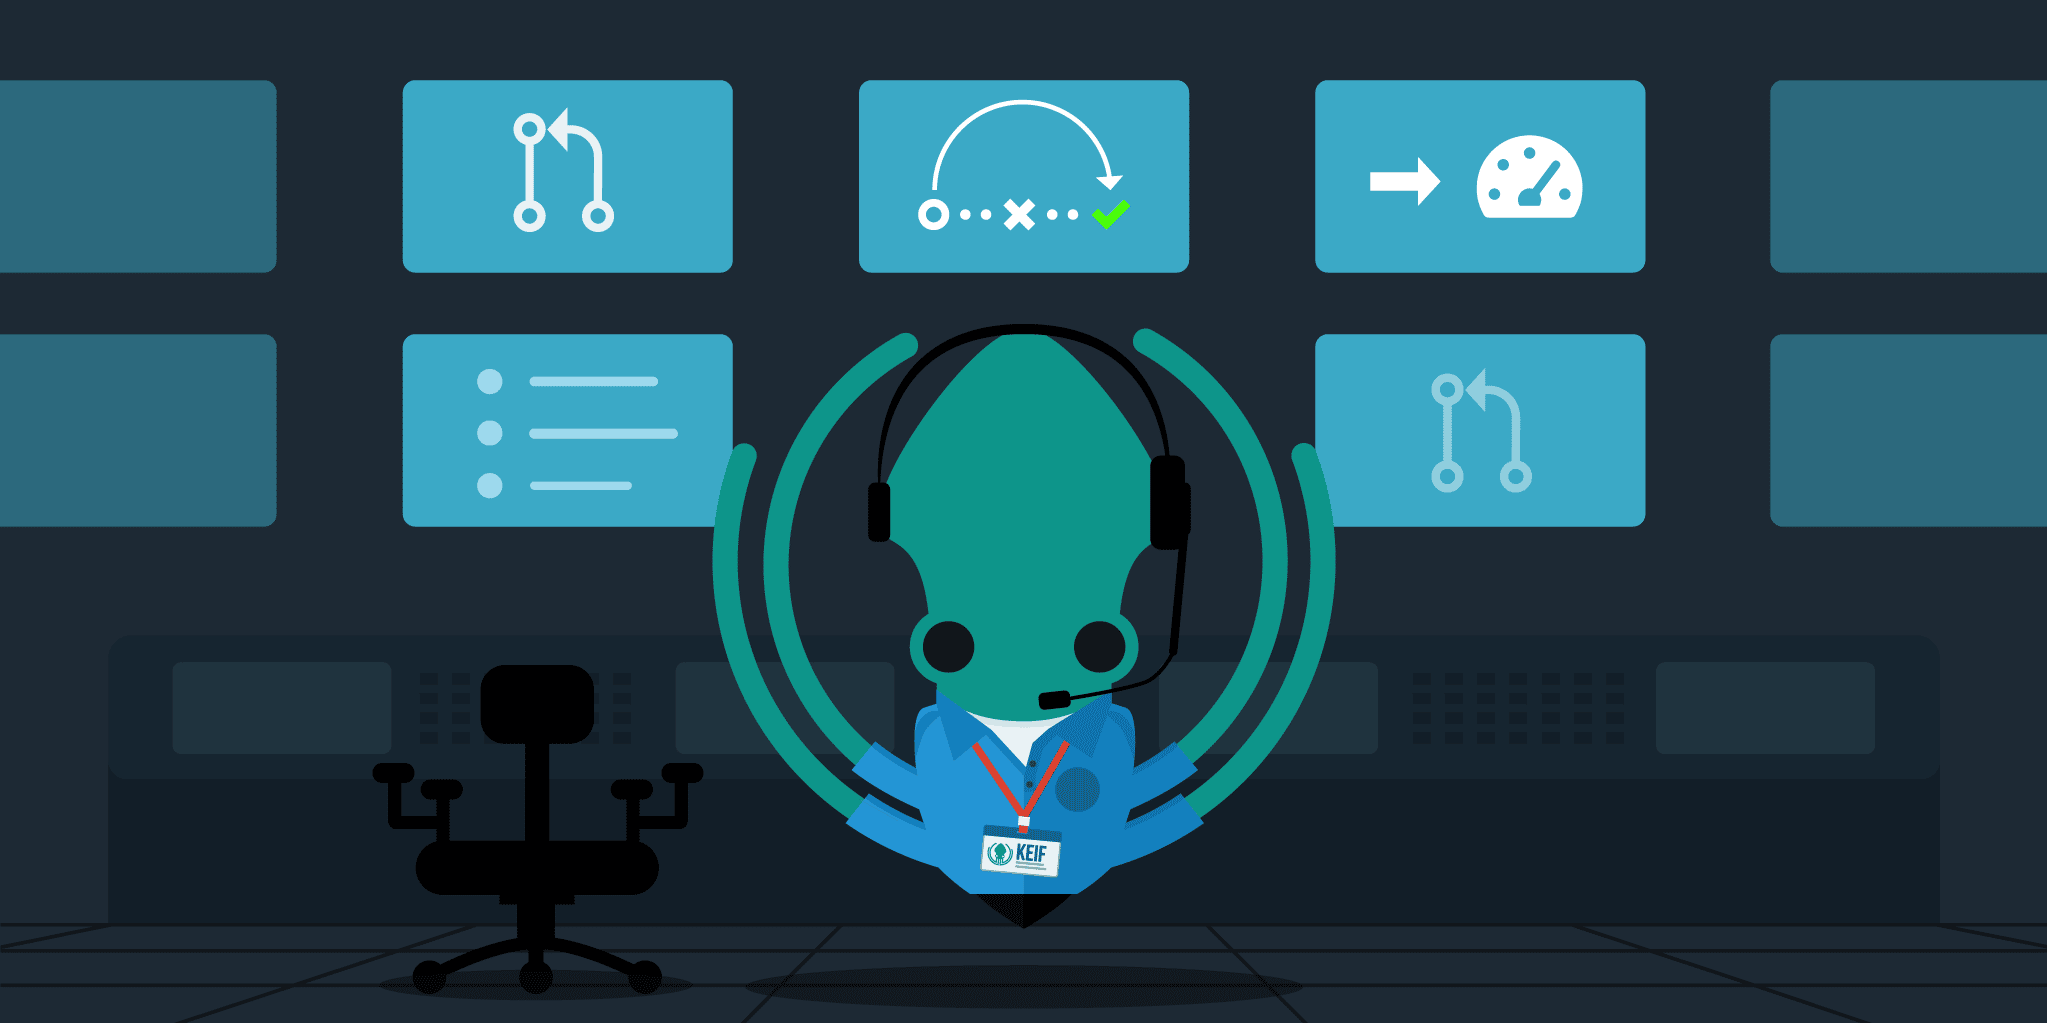 Image shows the GitKraken Kraken mascot in a control room